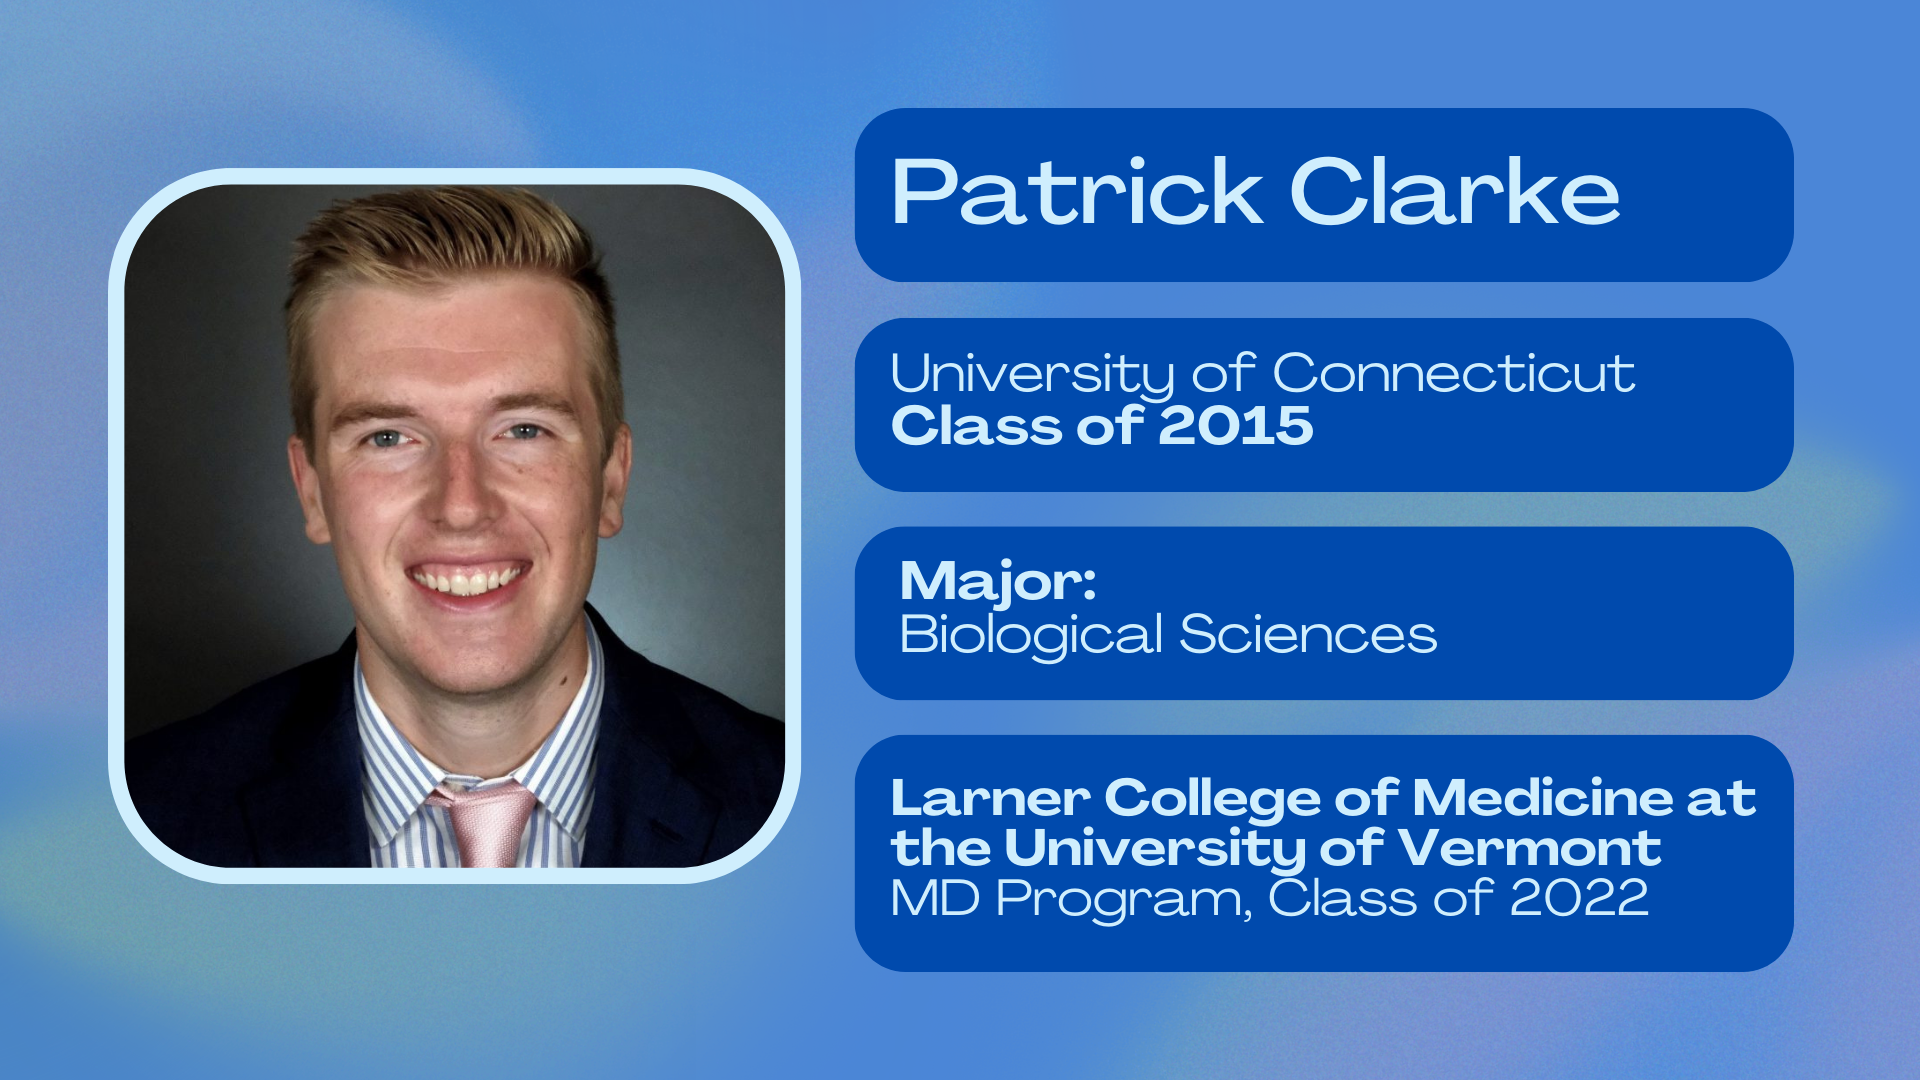 Patrick Clarke; University of Connecticut class of 2015; Biological Sciences major; Larner College of Medicine at the University of Vermont class of 2022